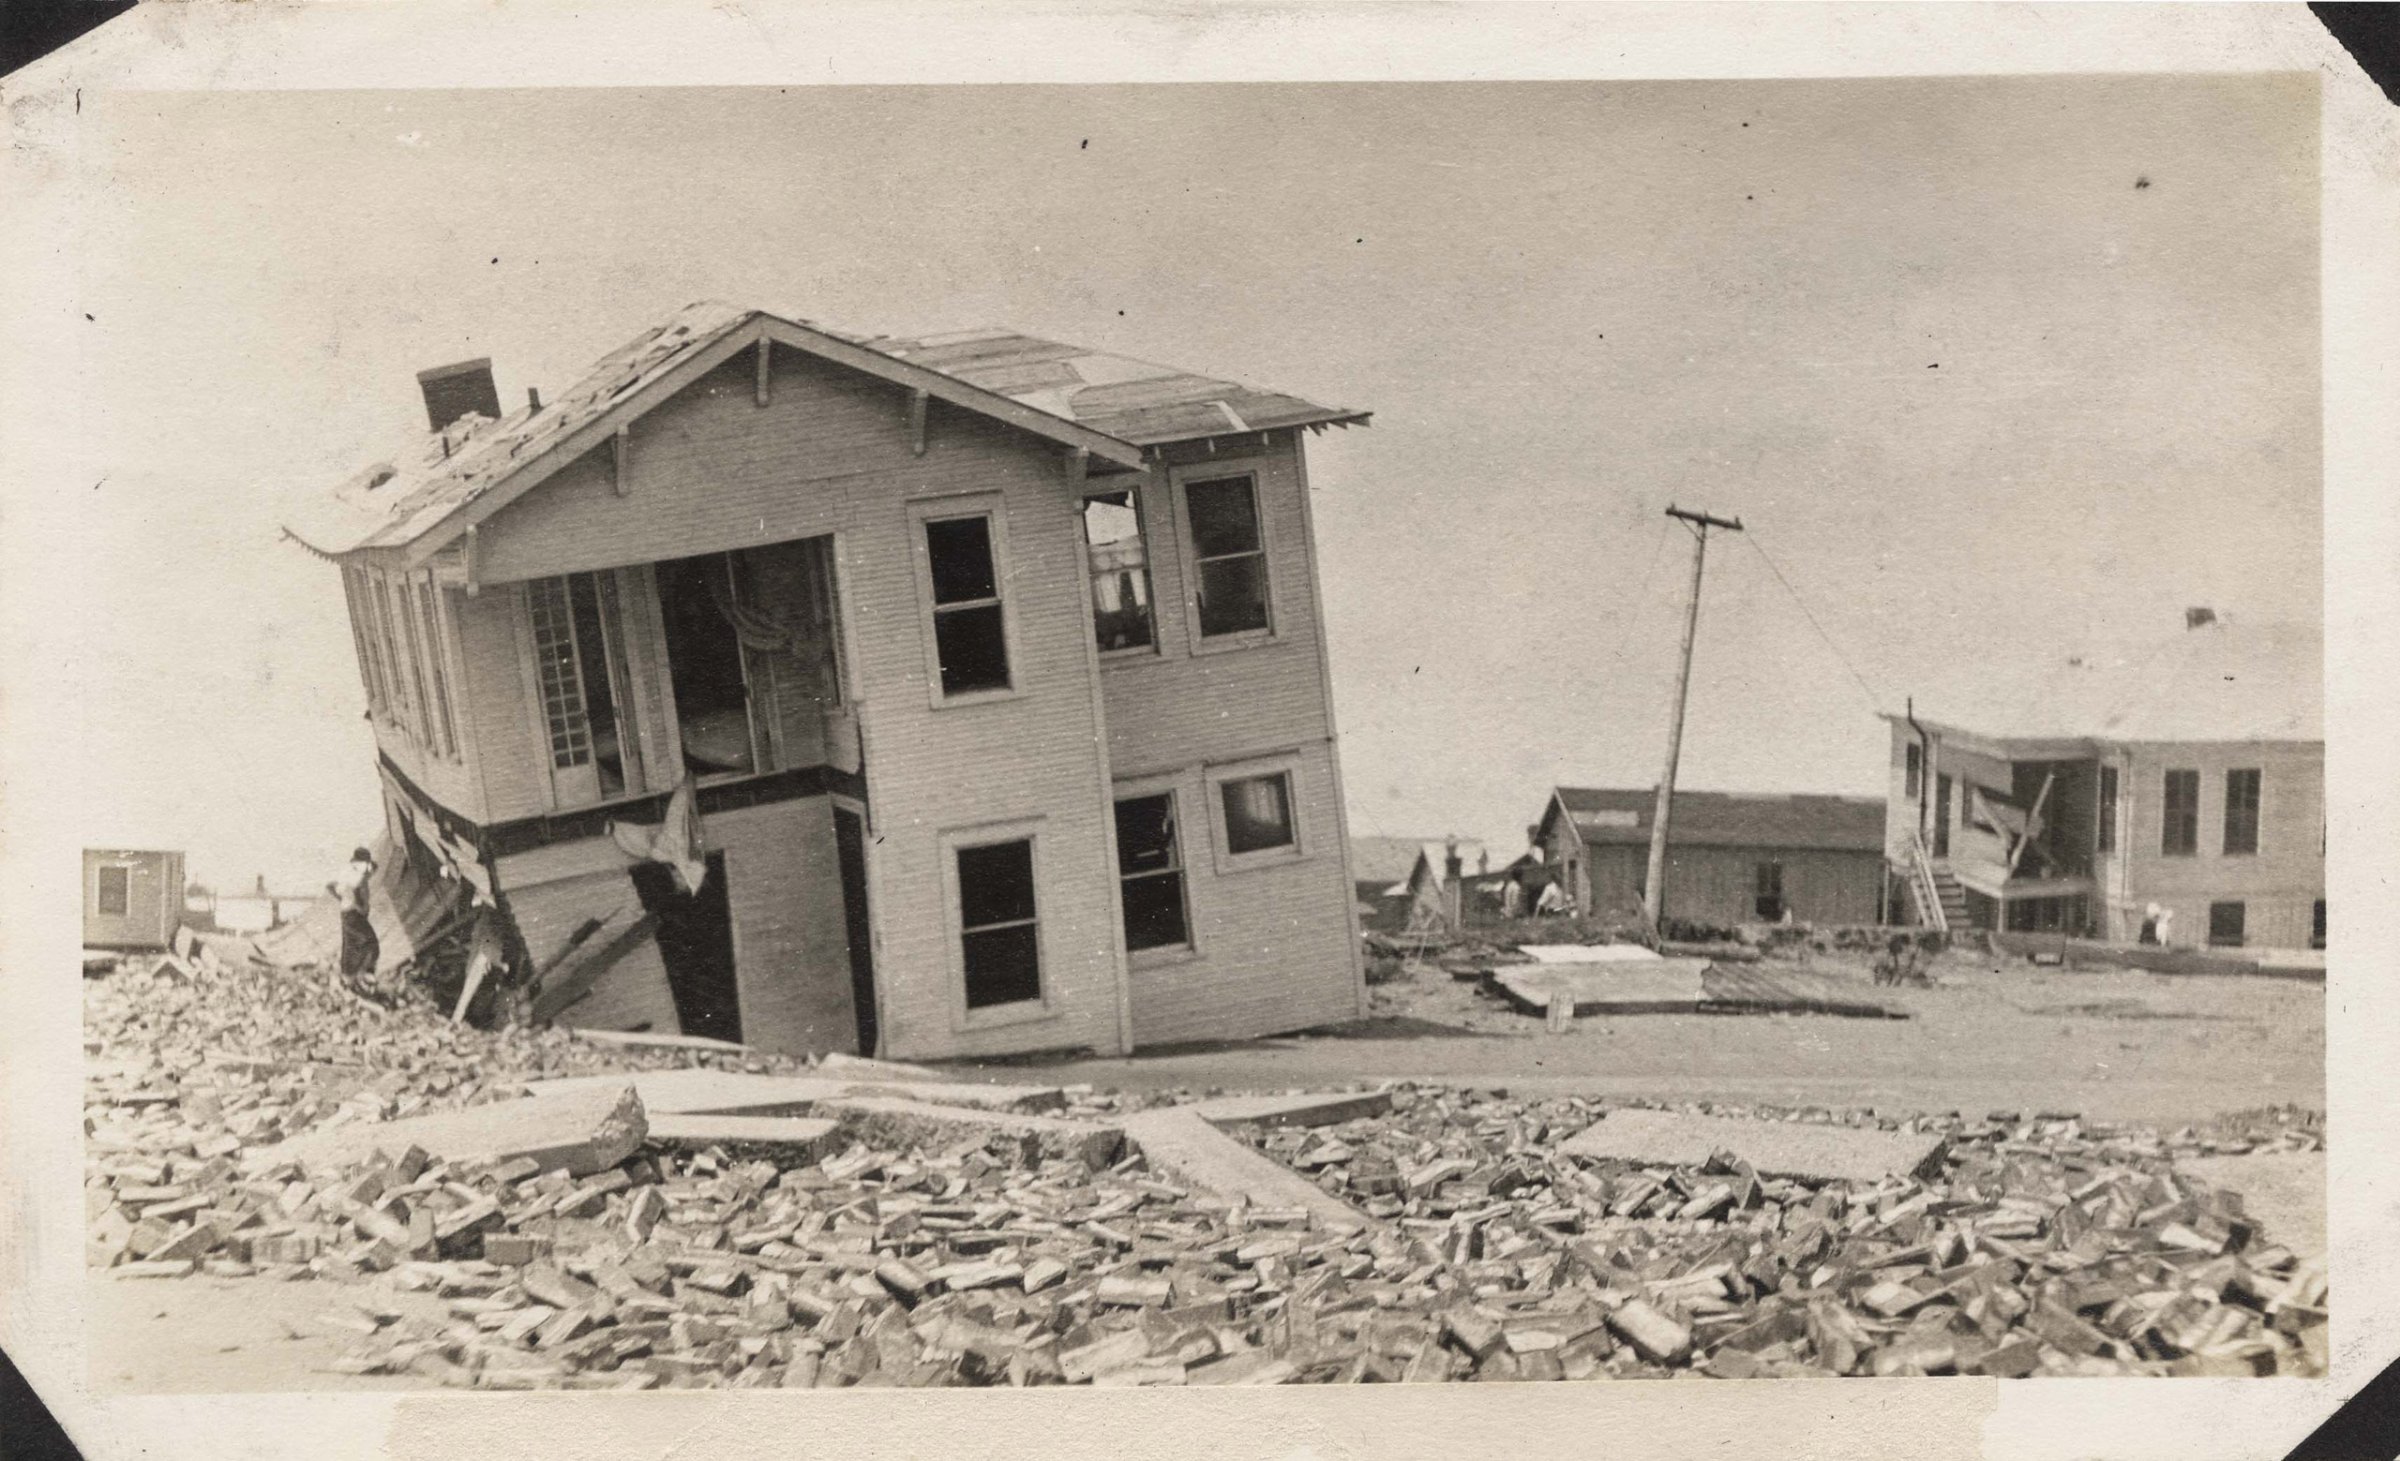 Scenes from the 1915 Galveston Texax Hurricane